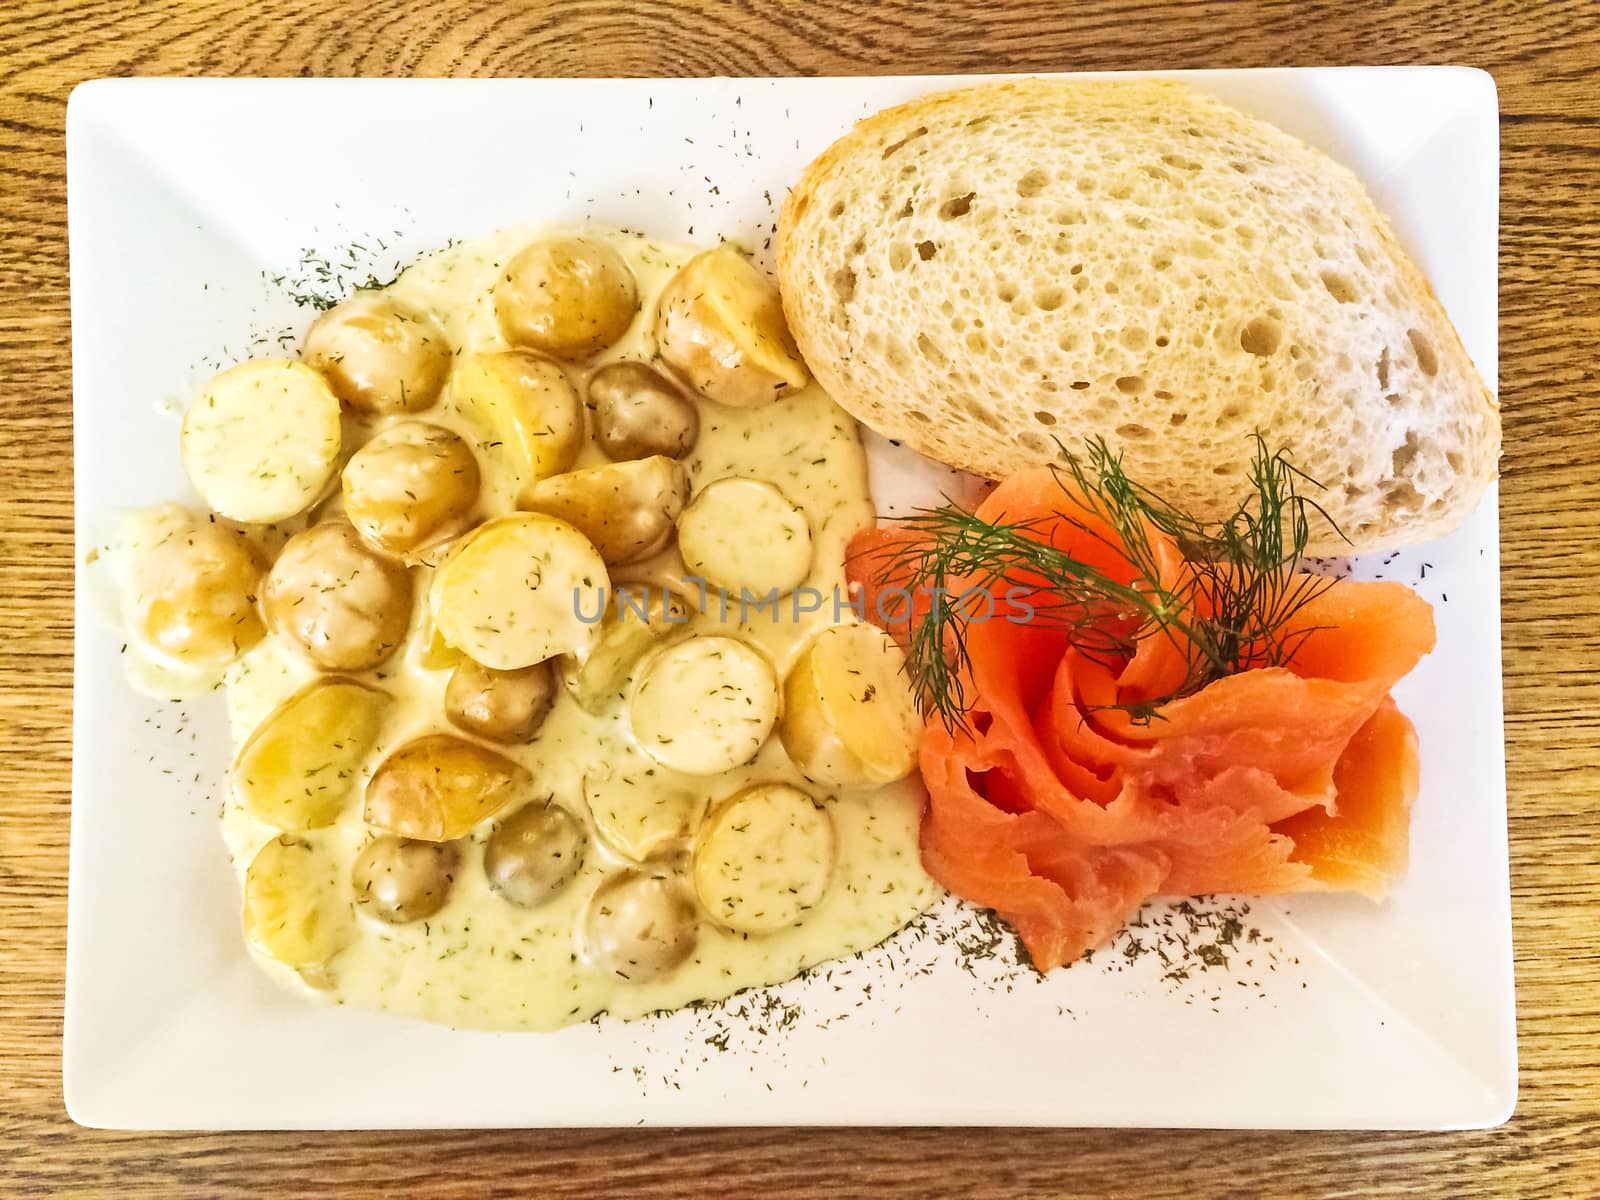 Smoked salmon and potatoes, traditional Swedish cuisine.